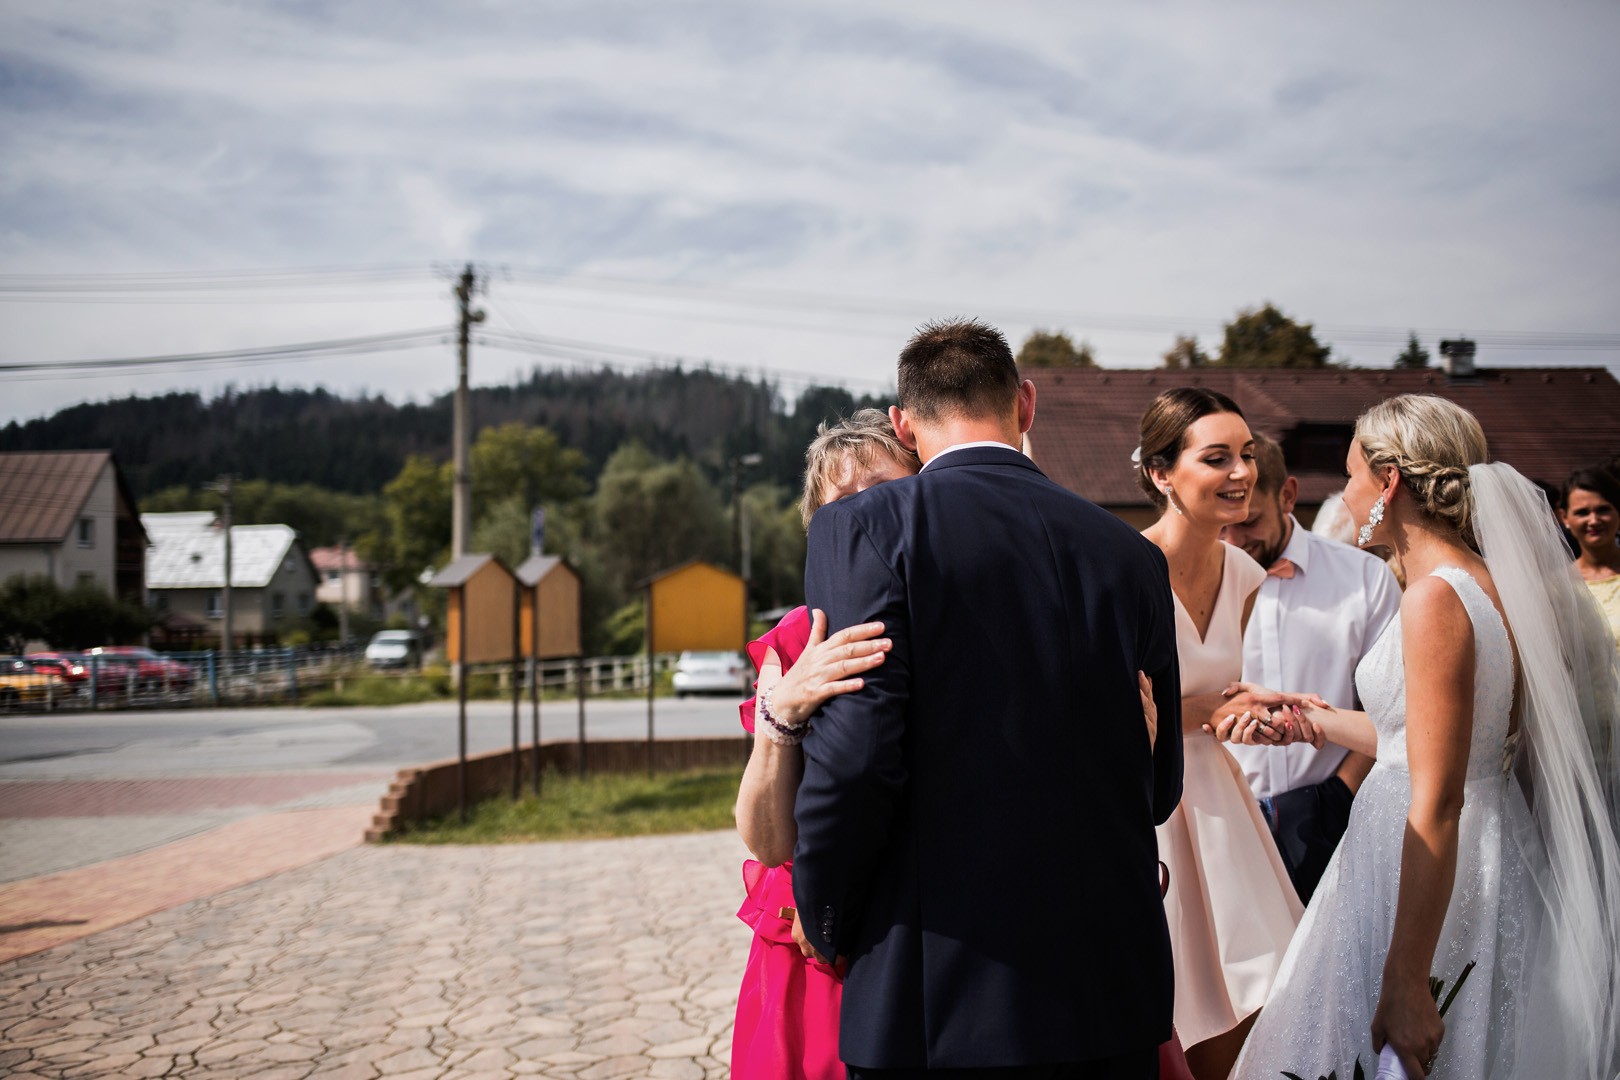 Wedding photos from the wedding day of Miška and Stanka. - 0350.jpg